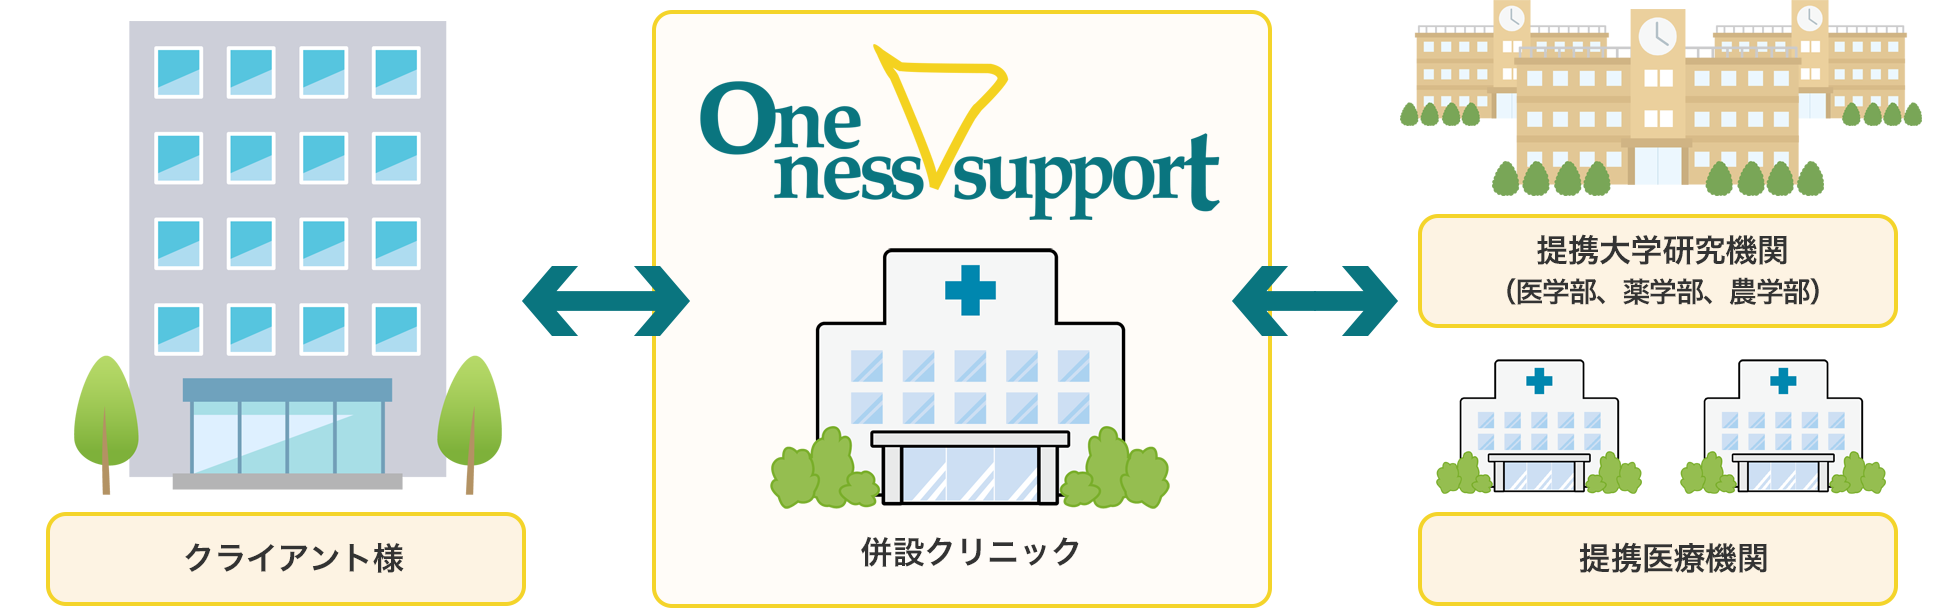 Oneness support の特徴の画像